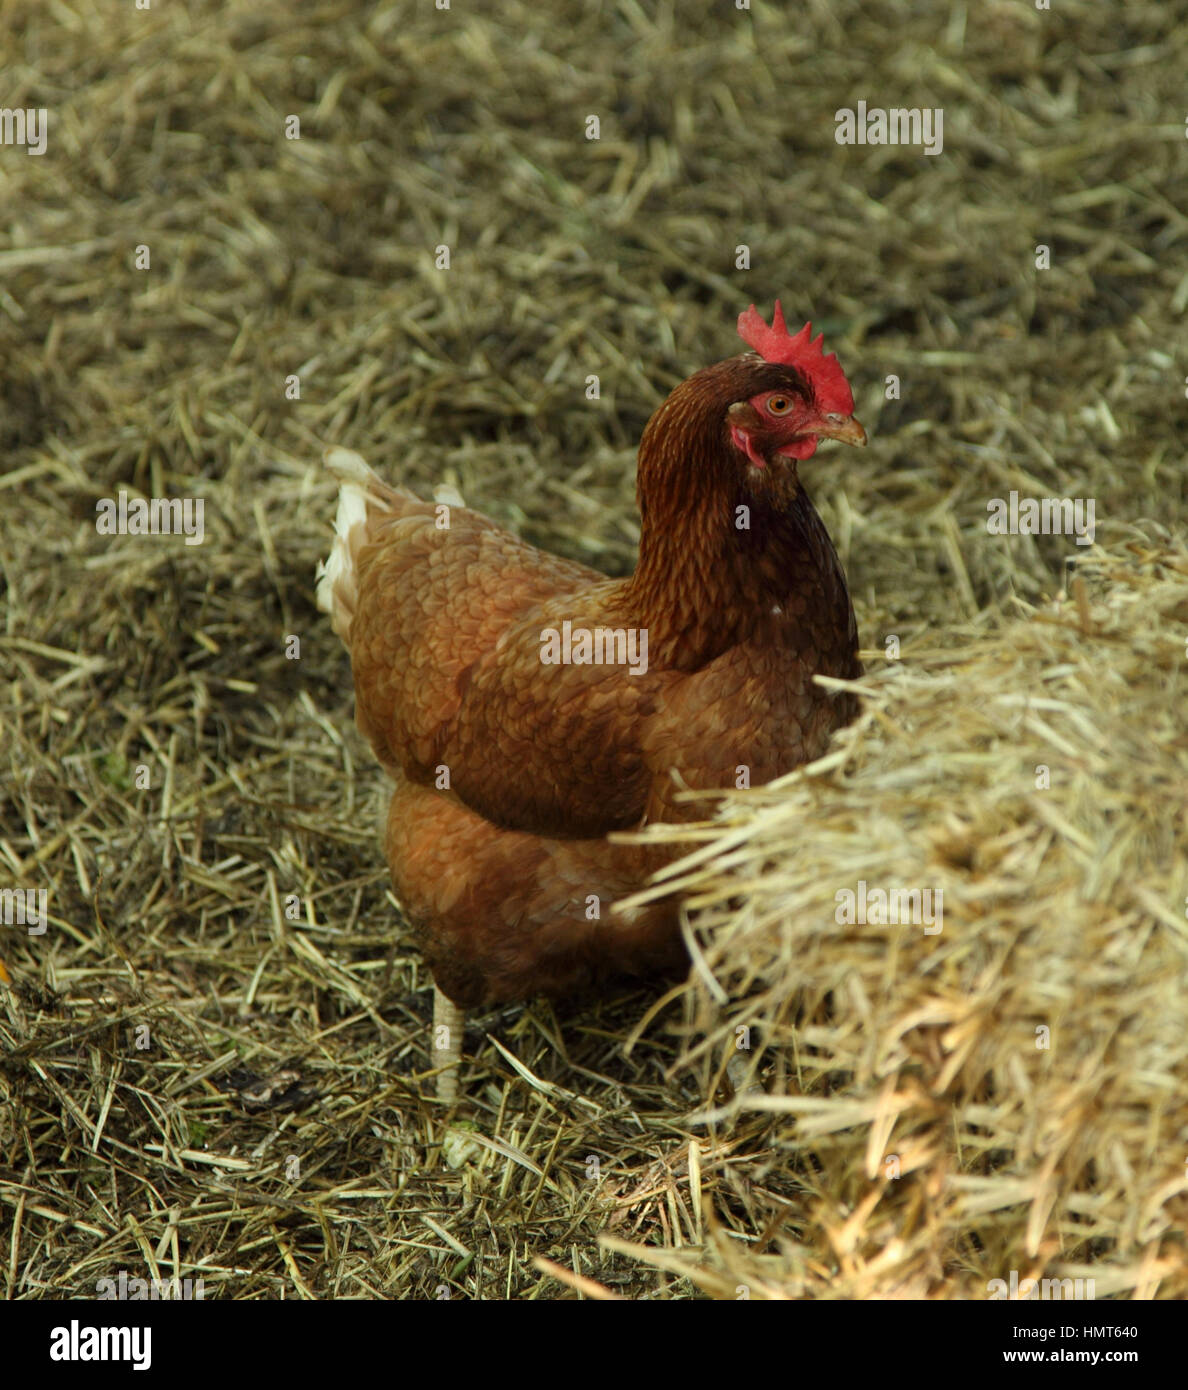 A free range chicken on grass beside a straw bale. Stock Photo